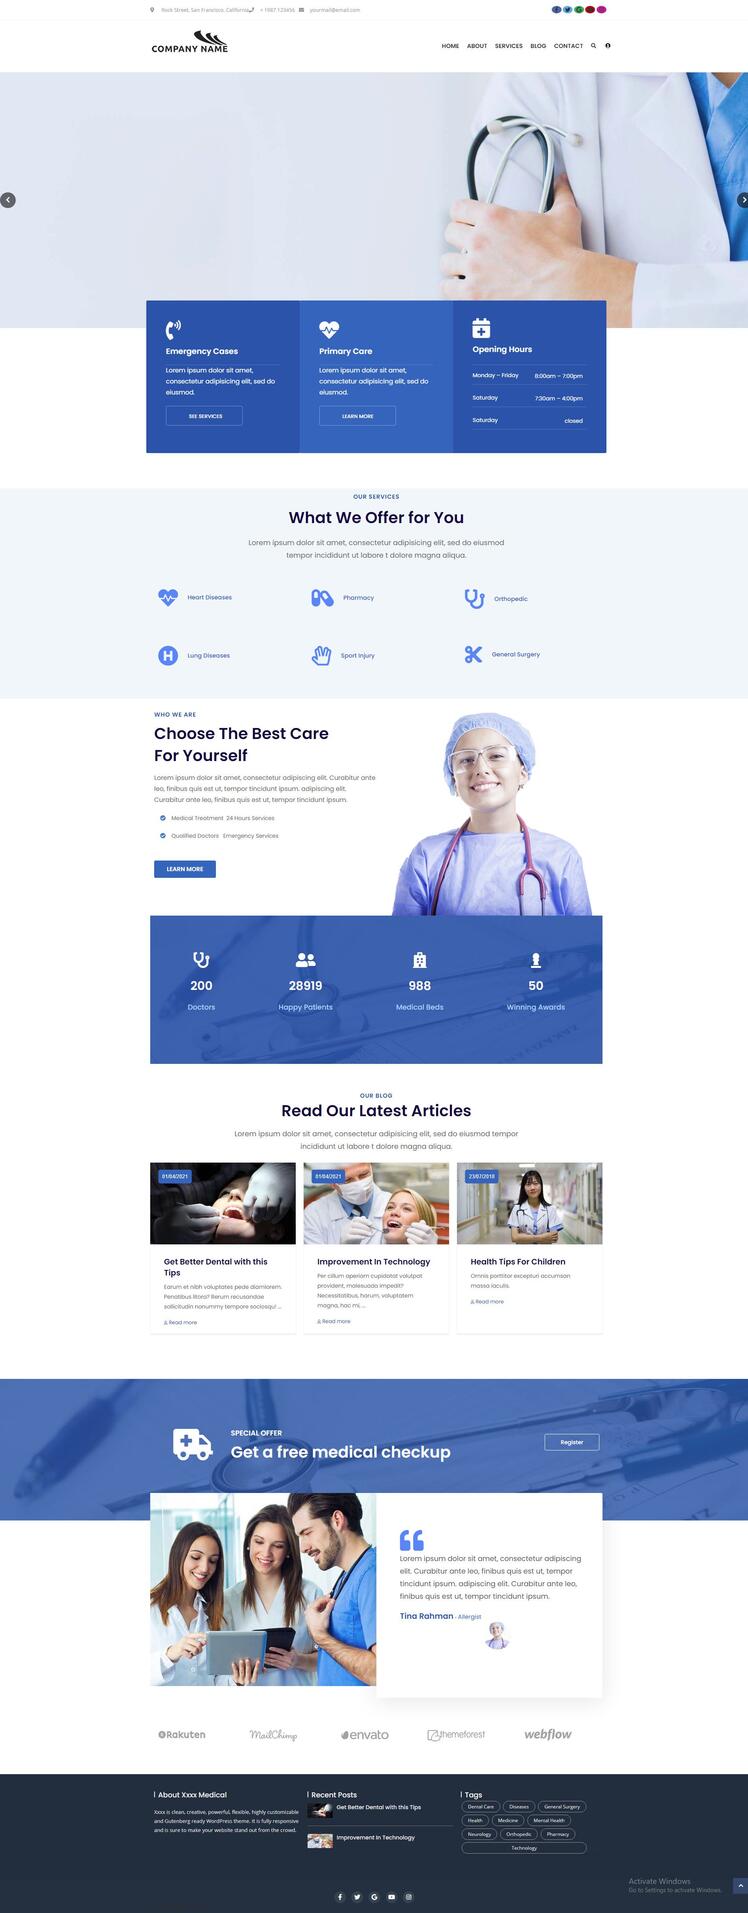 Thiết kế website bệnh viện 34